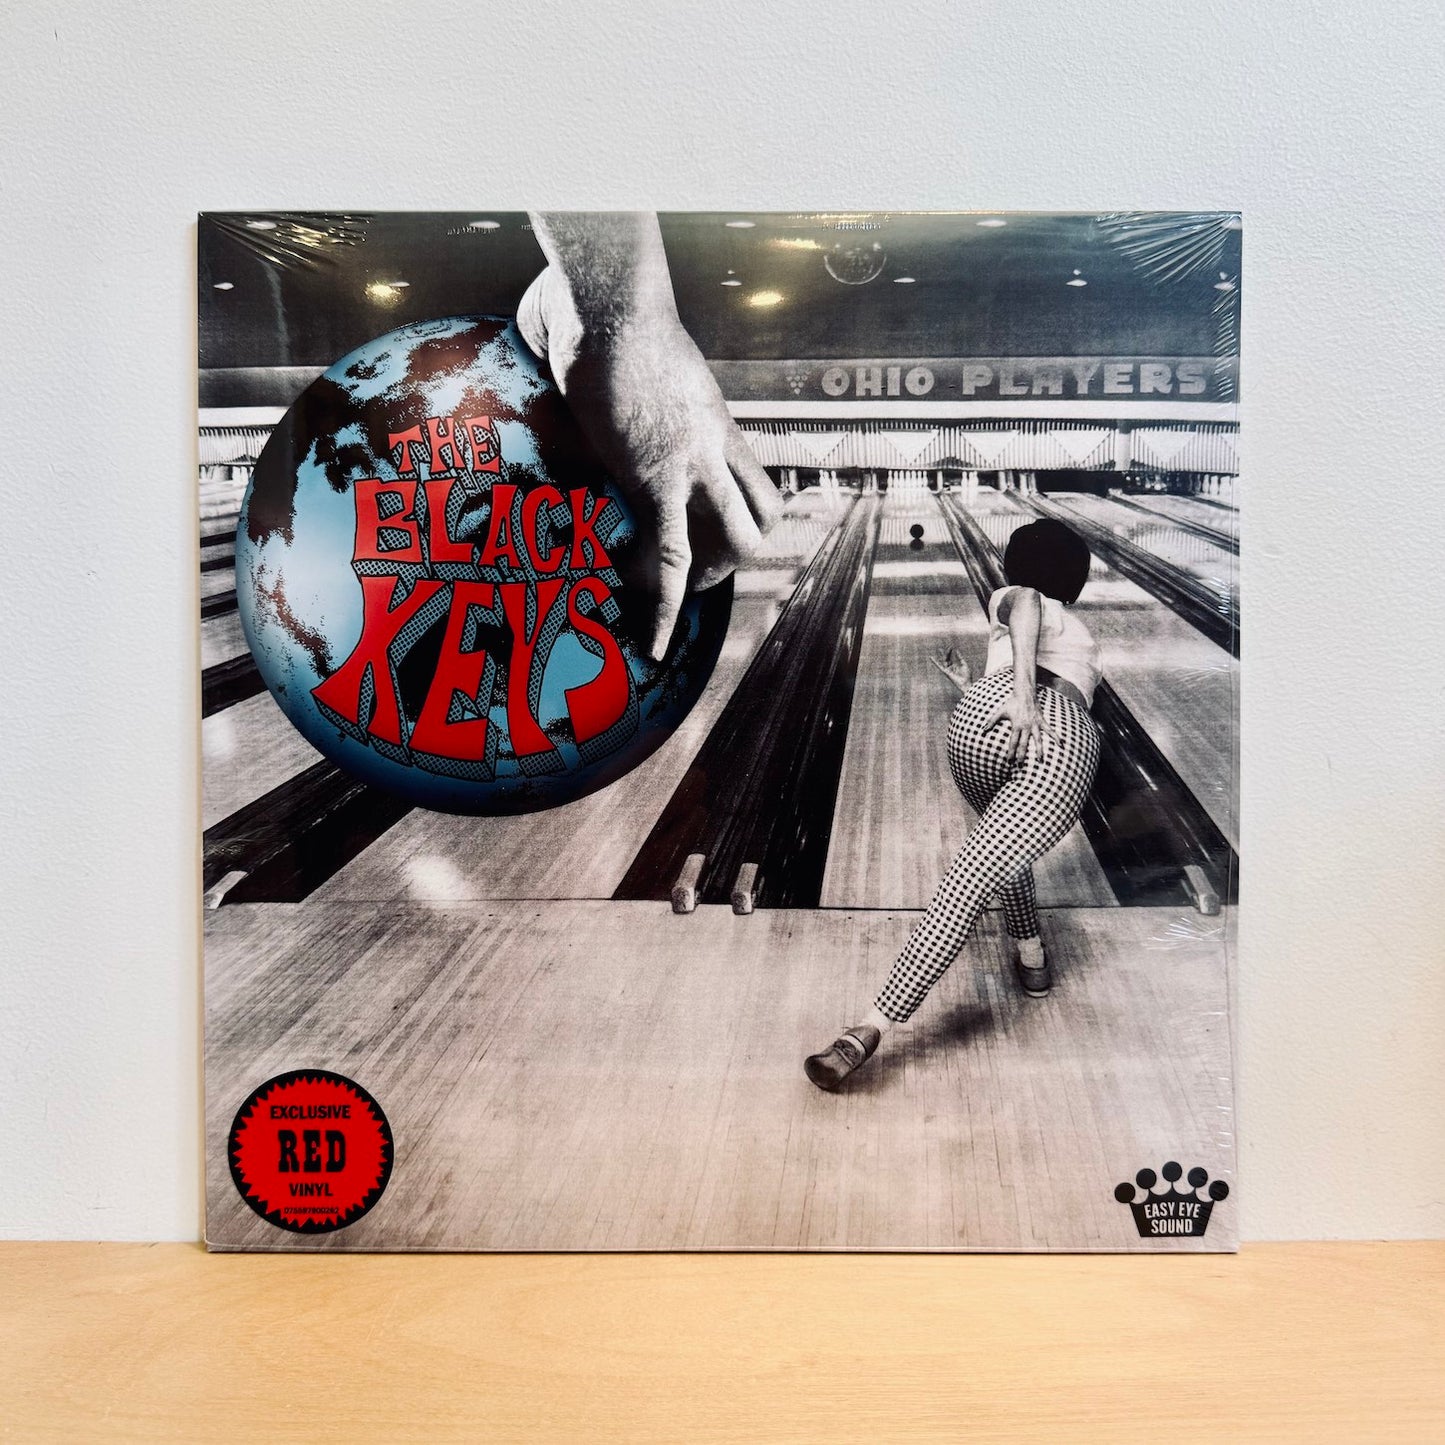 The Black Keys - Ohio Players. LP [Ltd. Ed. Red Vinyl]